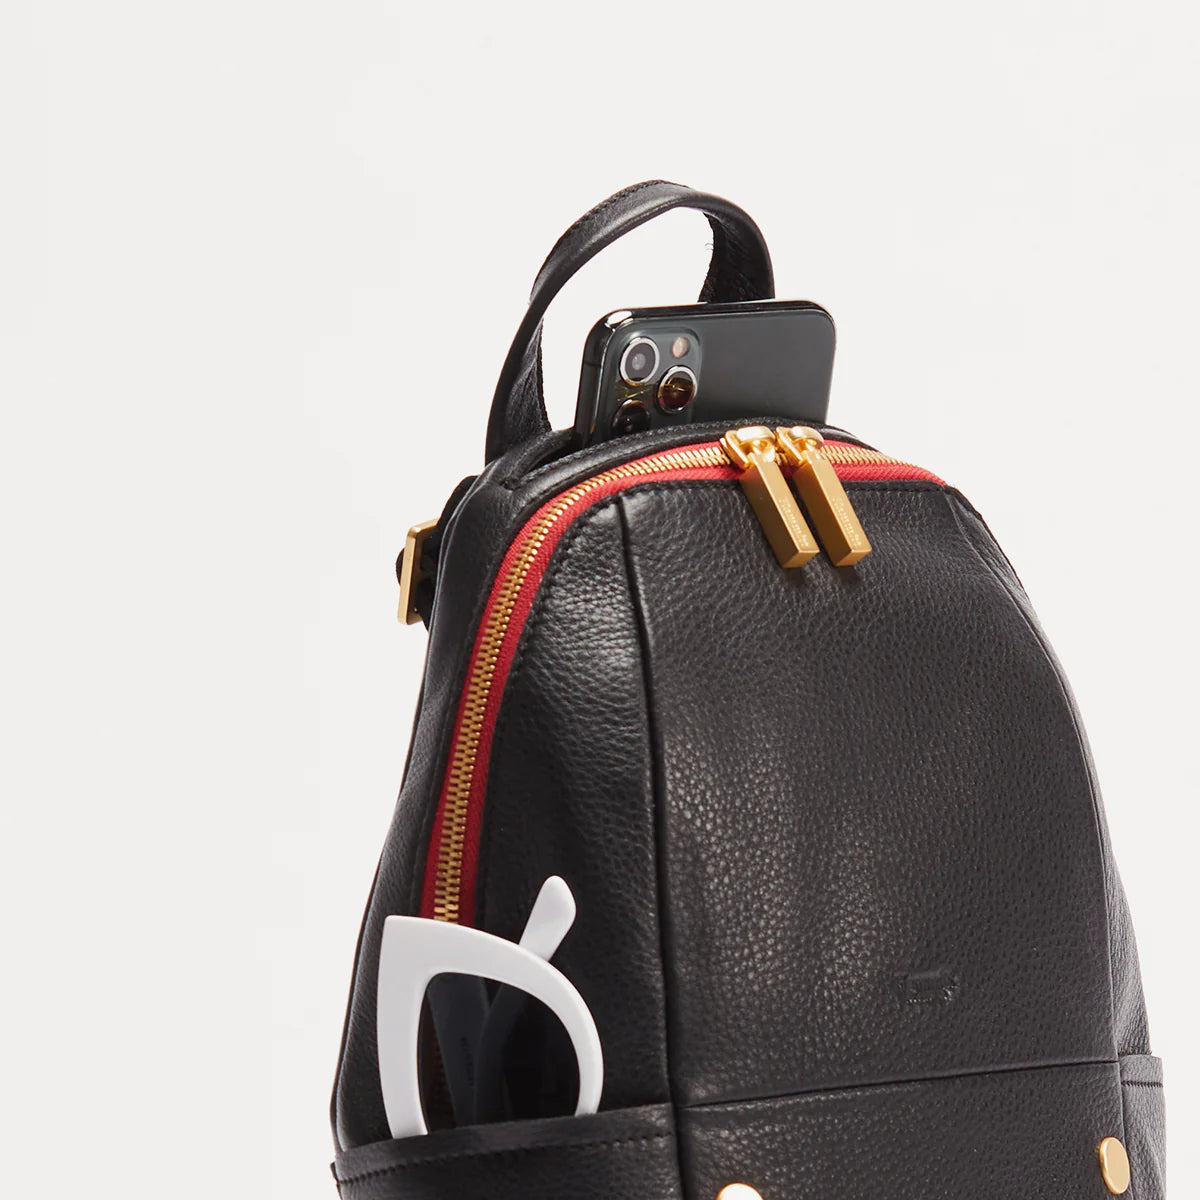 HUNTER MED Backpack in Black/ Gold with Red Zipper